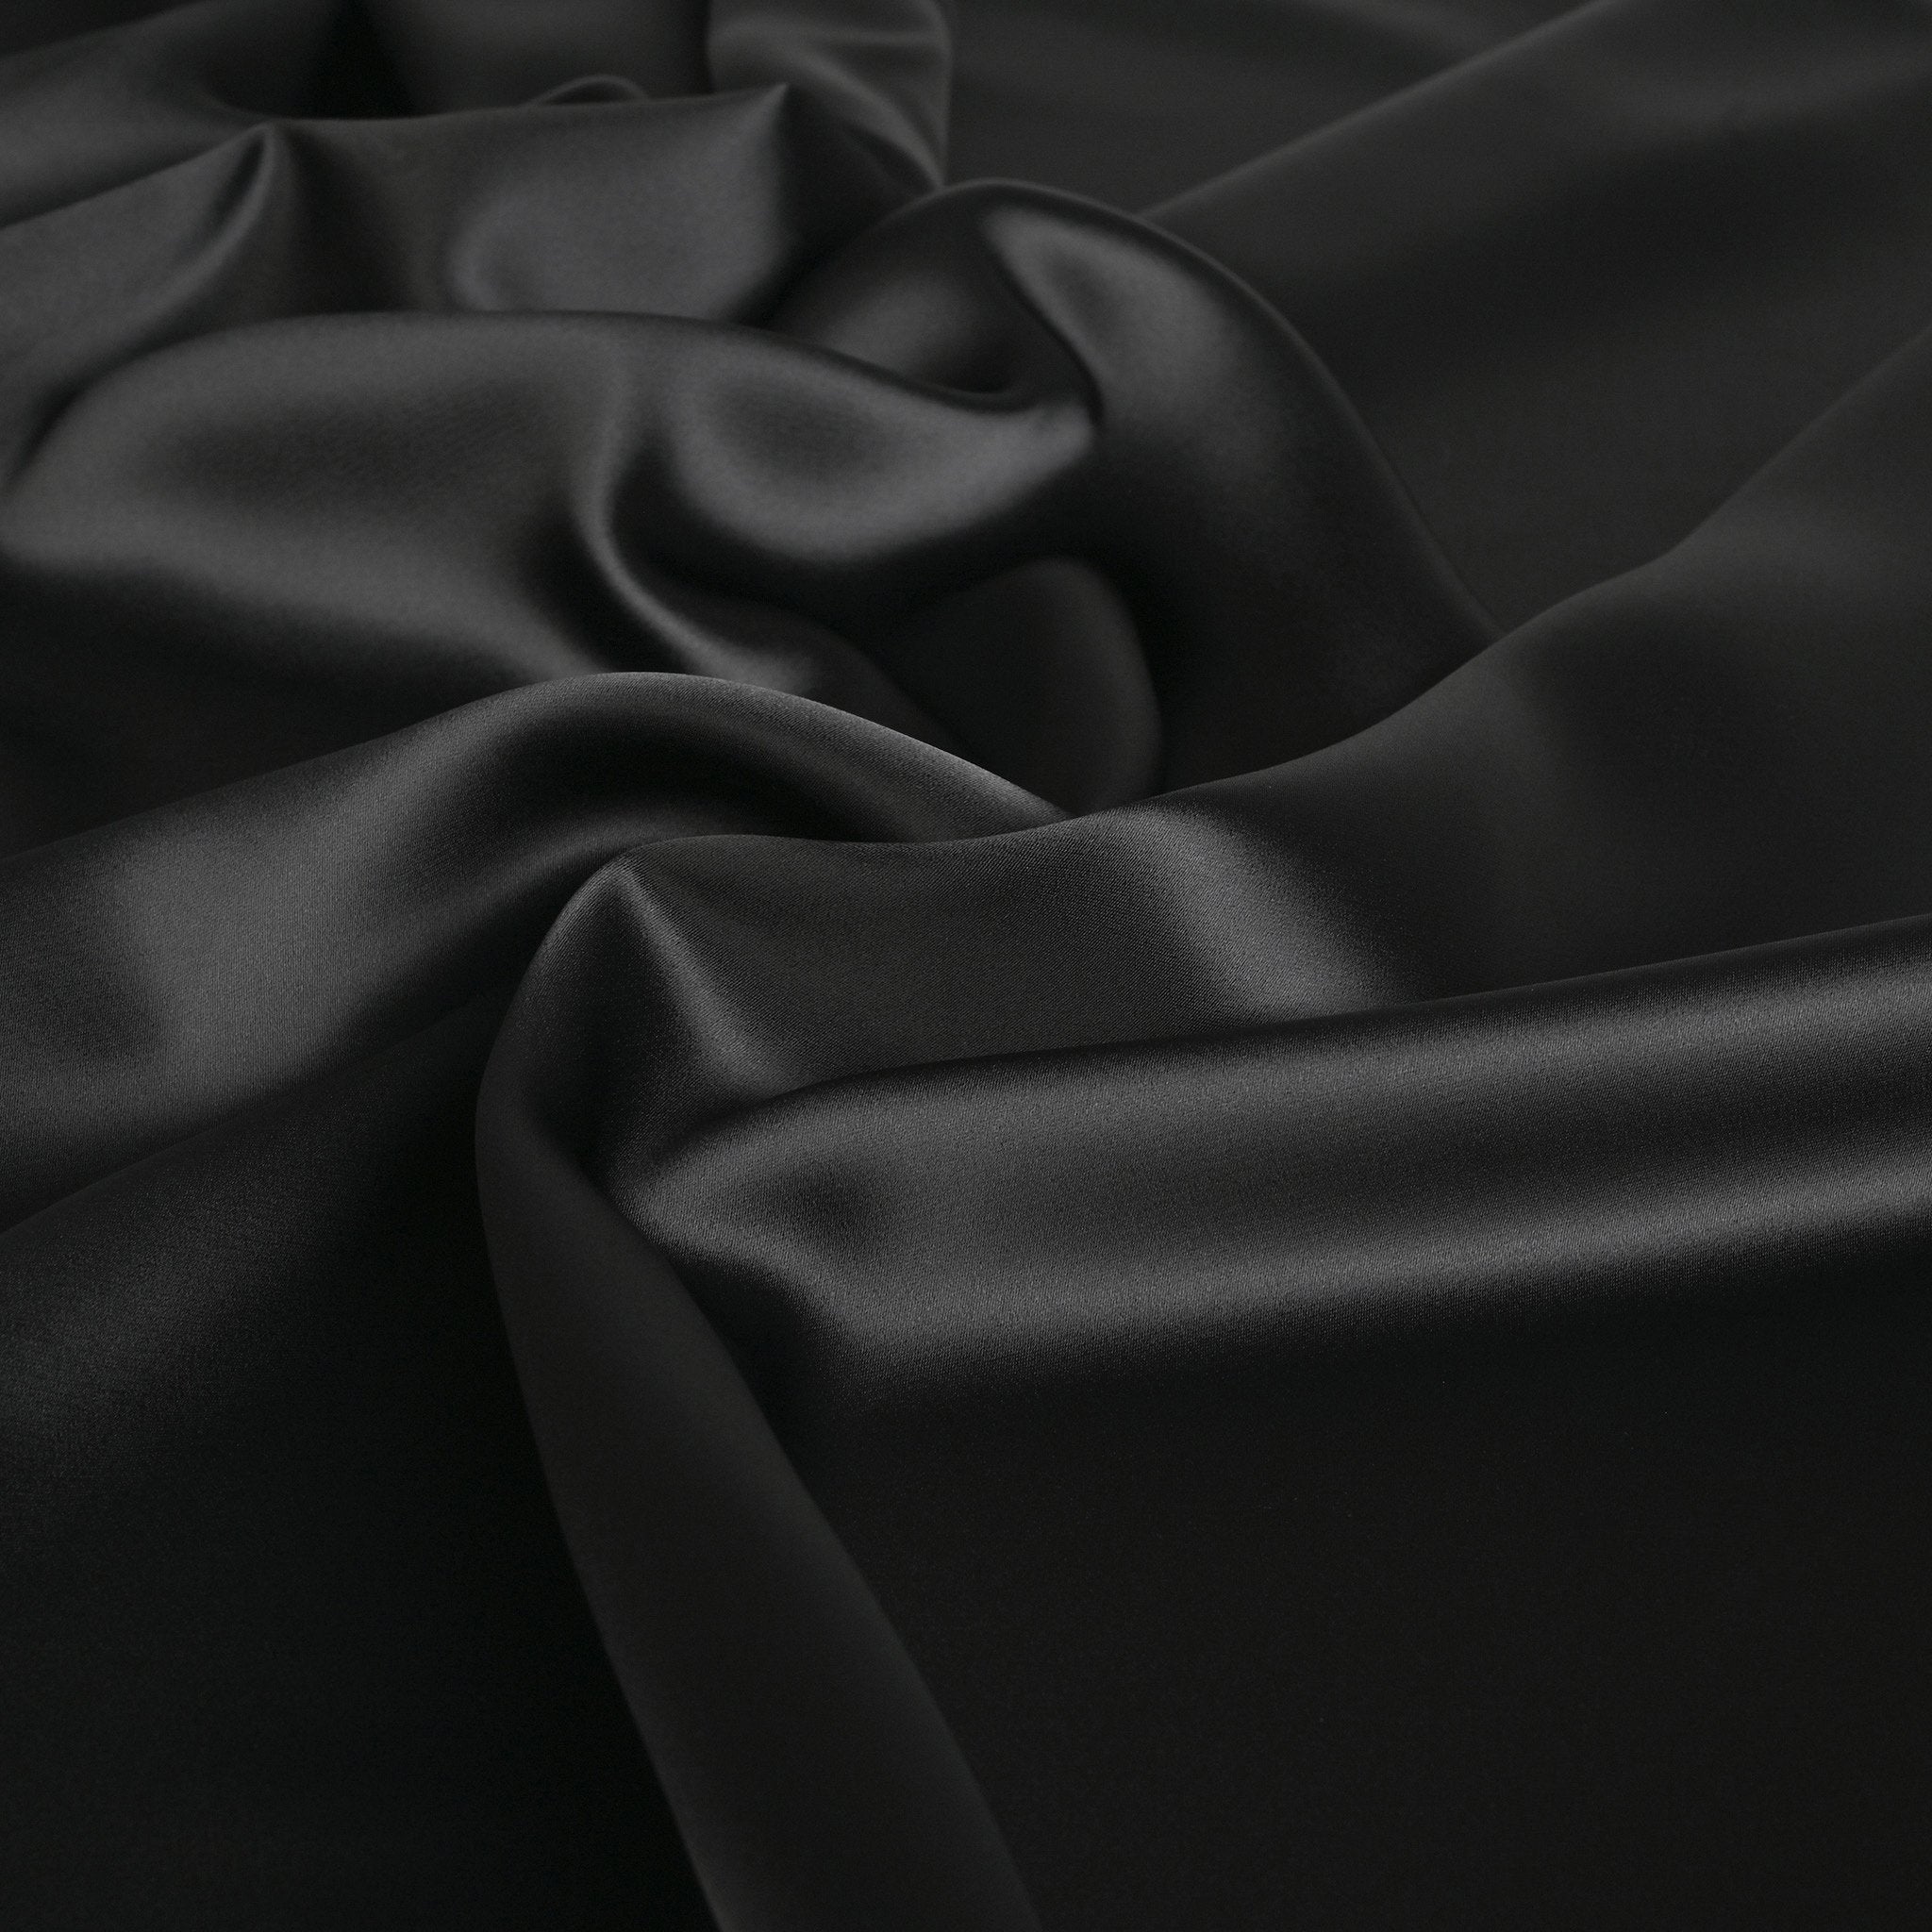 Black Satin Fabric 4079